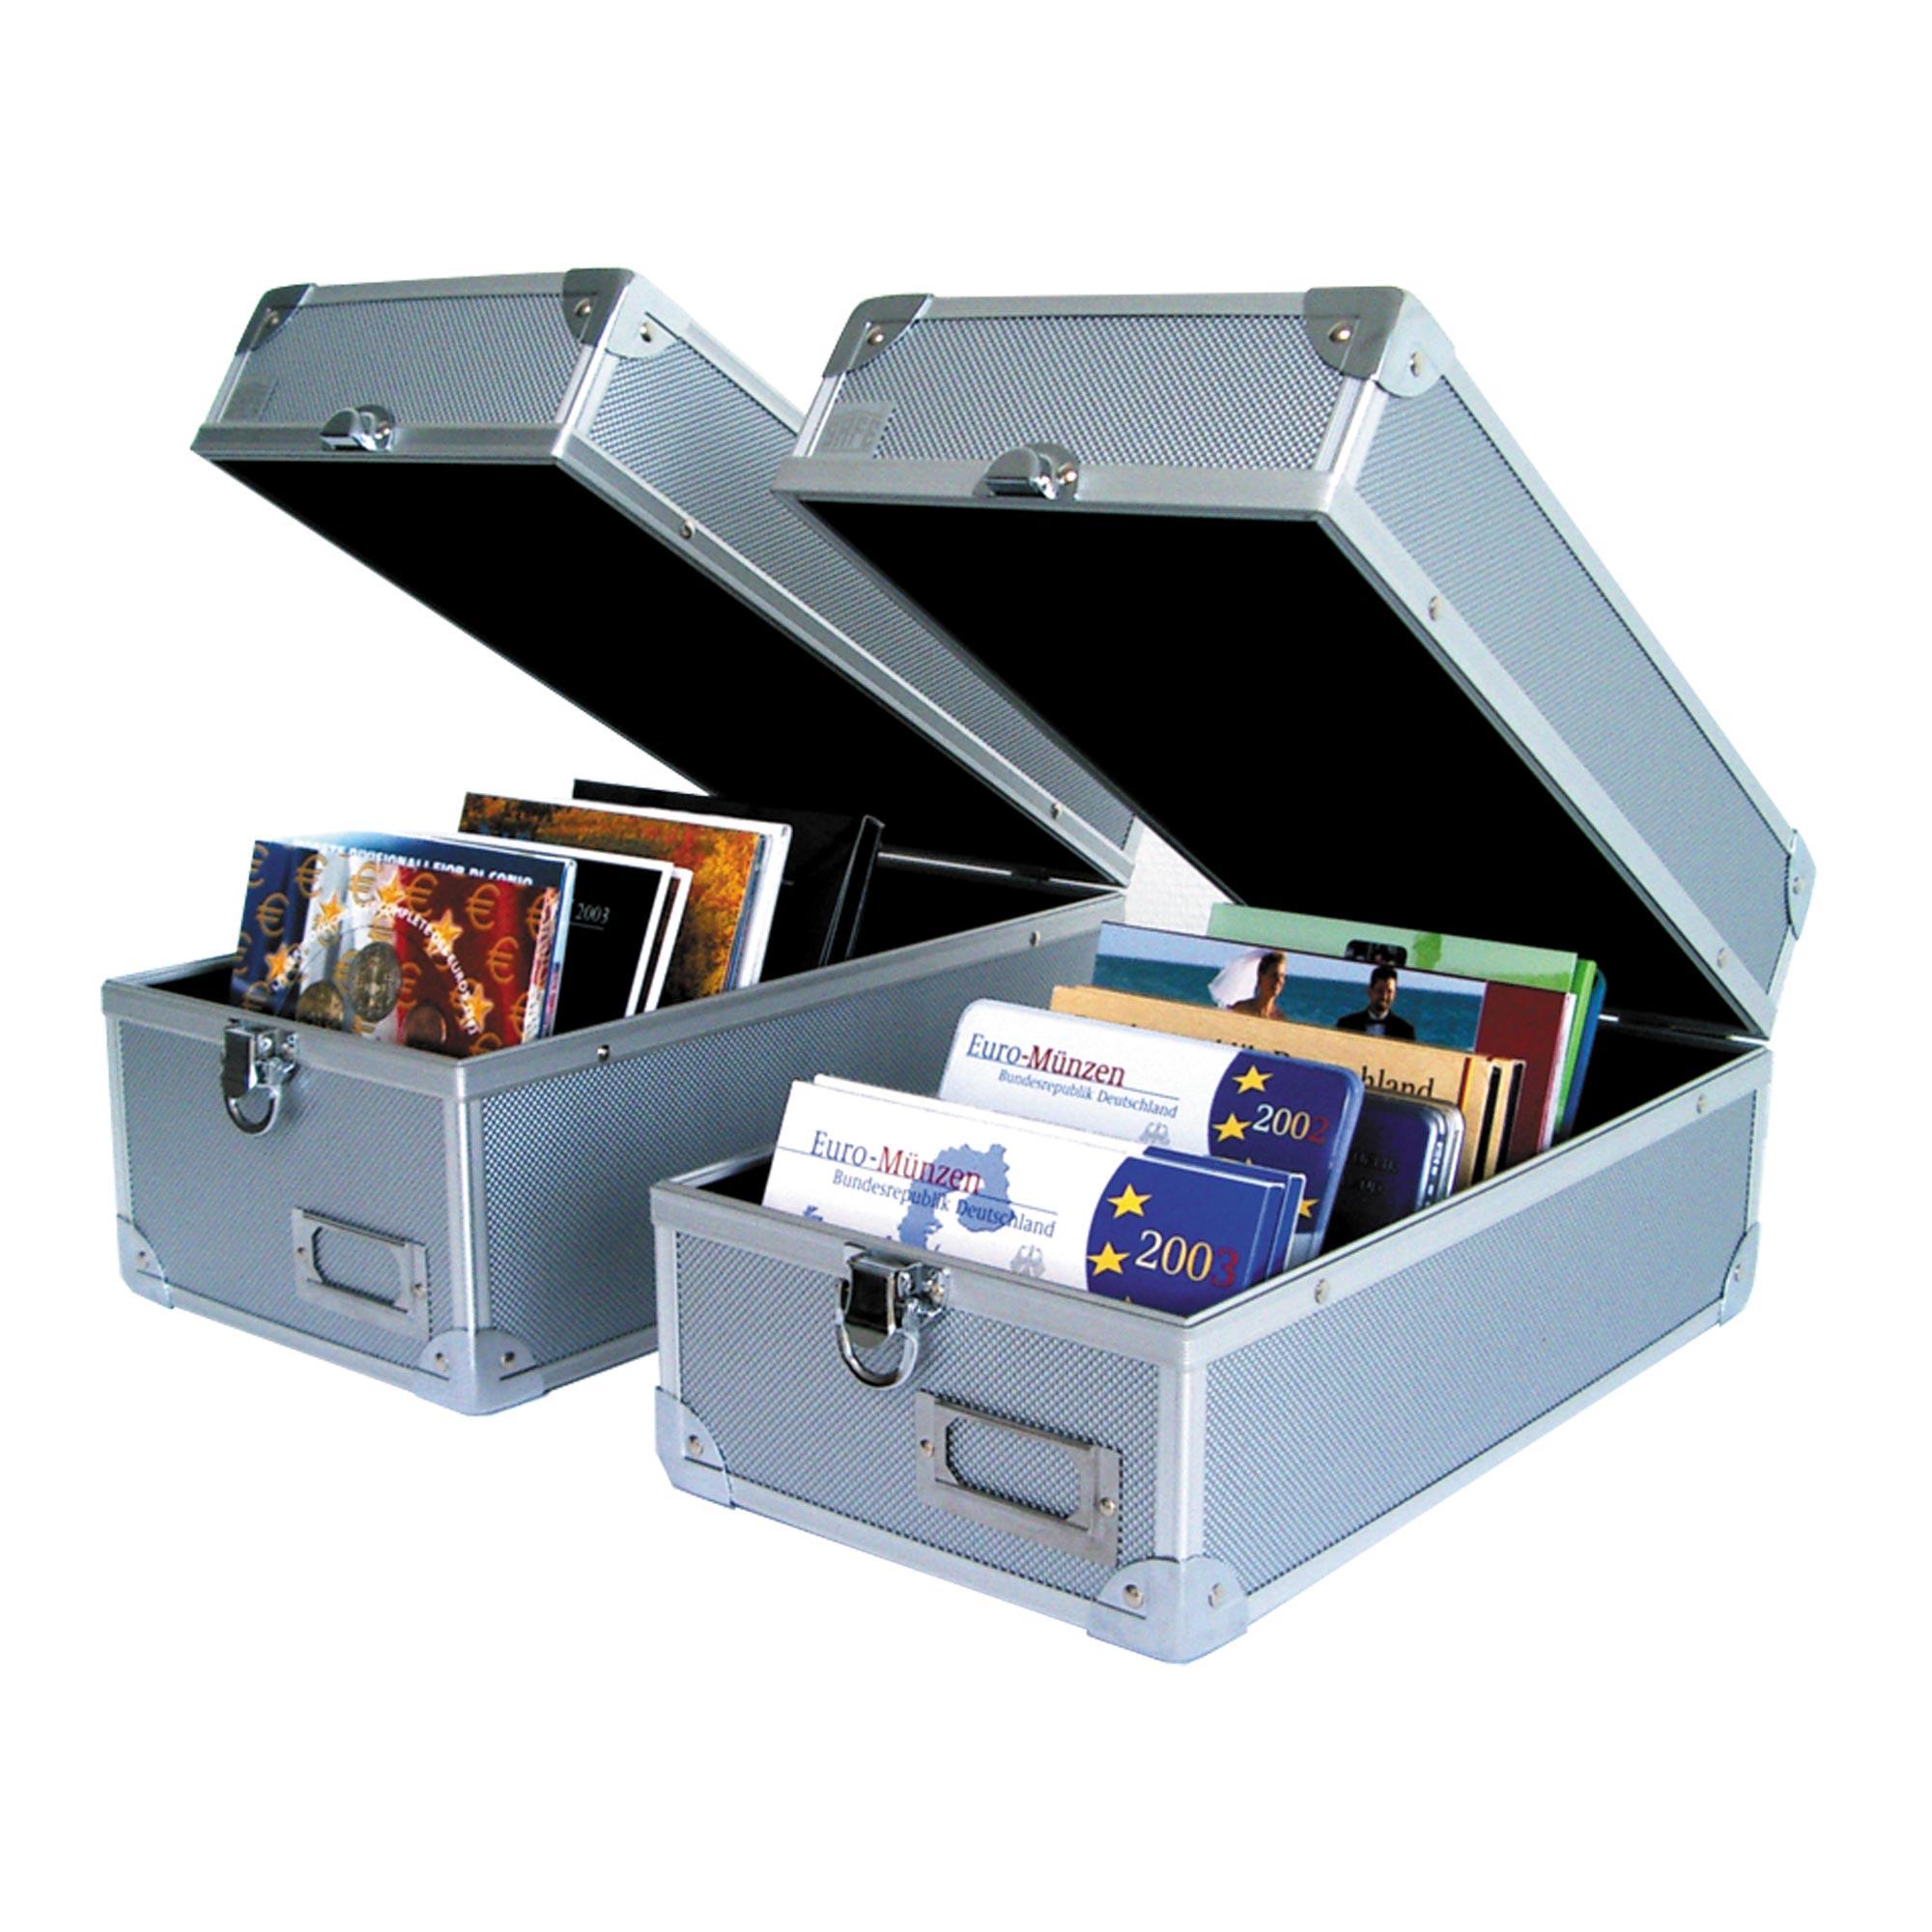 Collectors Aluminium Case with handles - for Postcards Photos etc